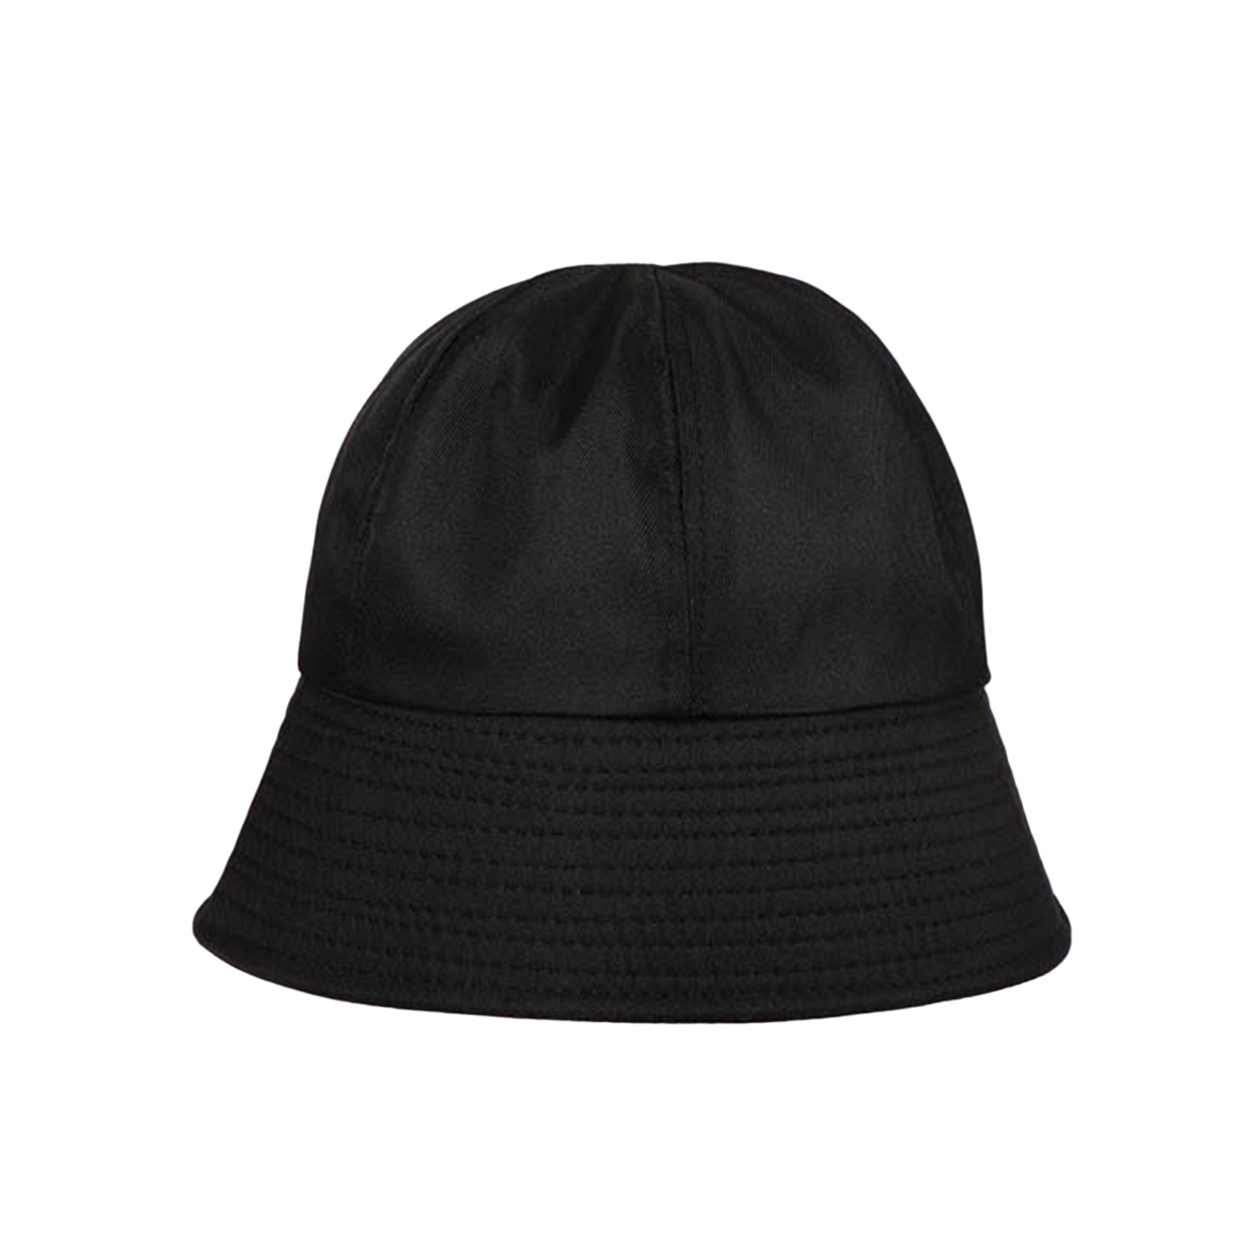 Generic Sun Cap Foldable Sun Block Solid Color Bucket Hat Packable Fisherman Cap for Outdoor